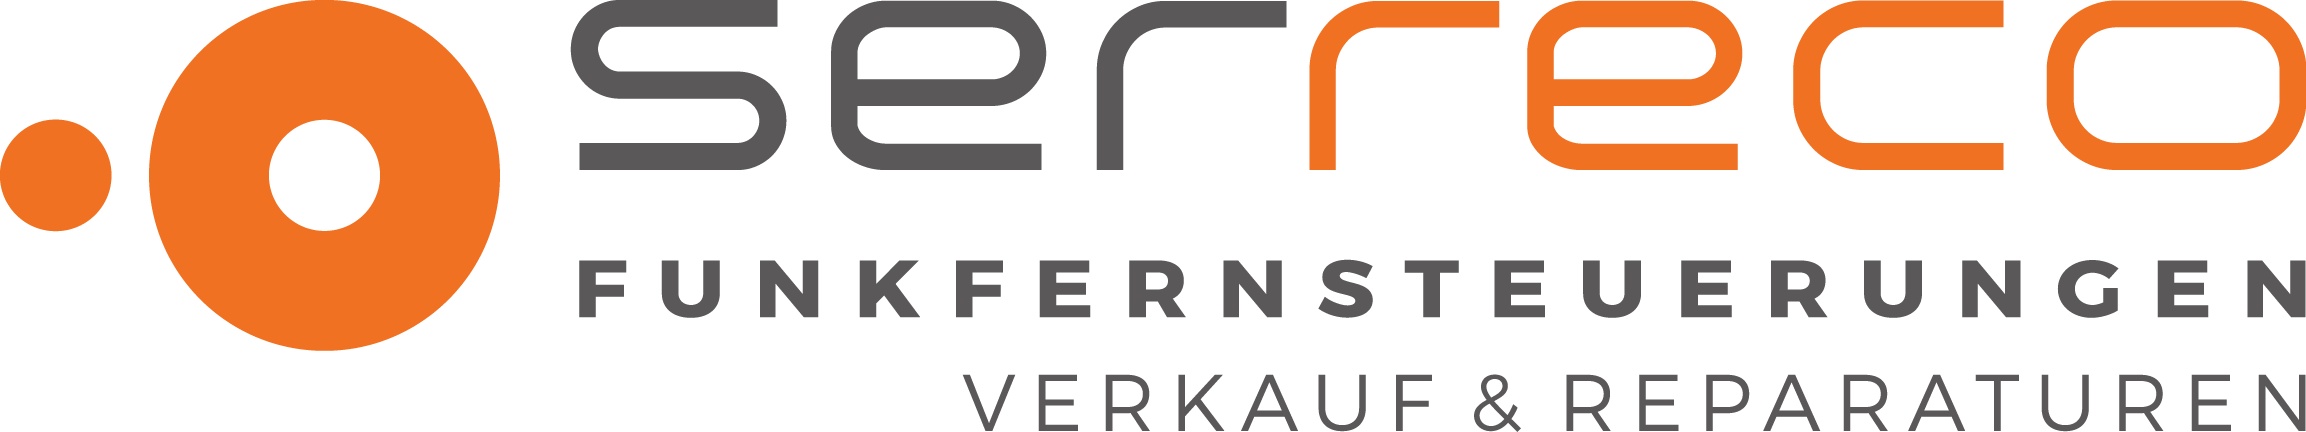 SERRECO GmbH